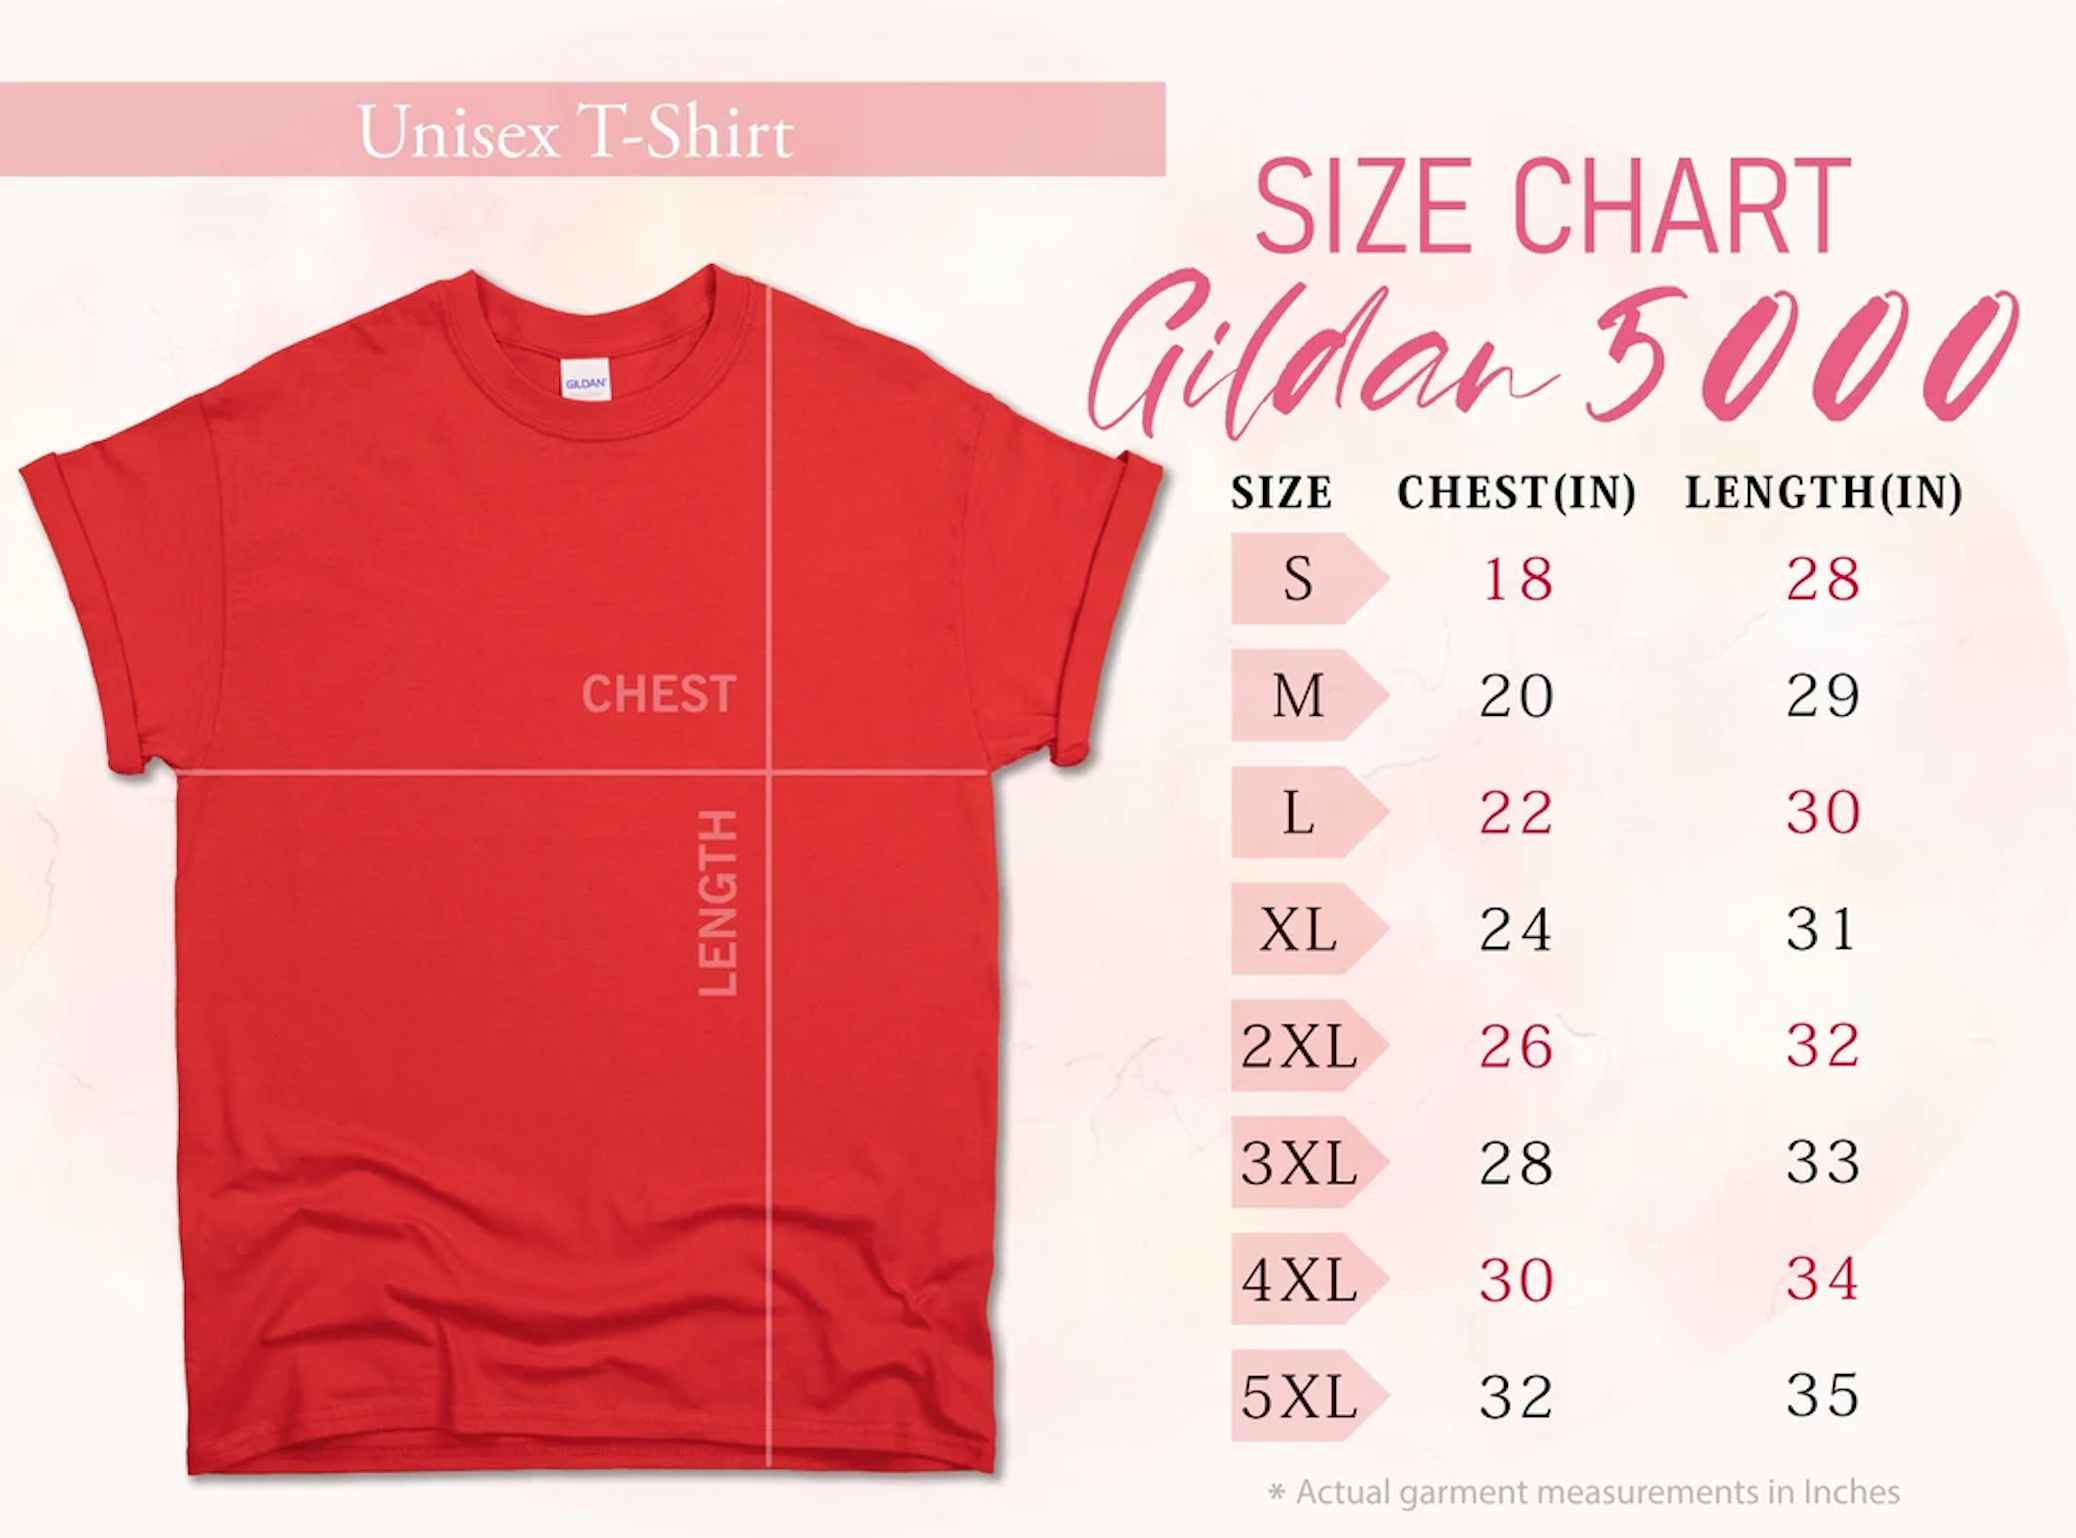 A gildan size chart indicating the sizes from small, medium, large, XL, 2XL, 3XL, 4XL, 5XL.